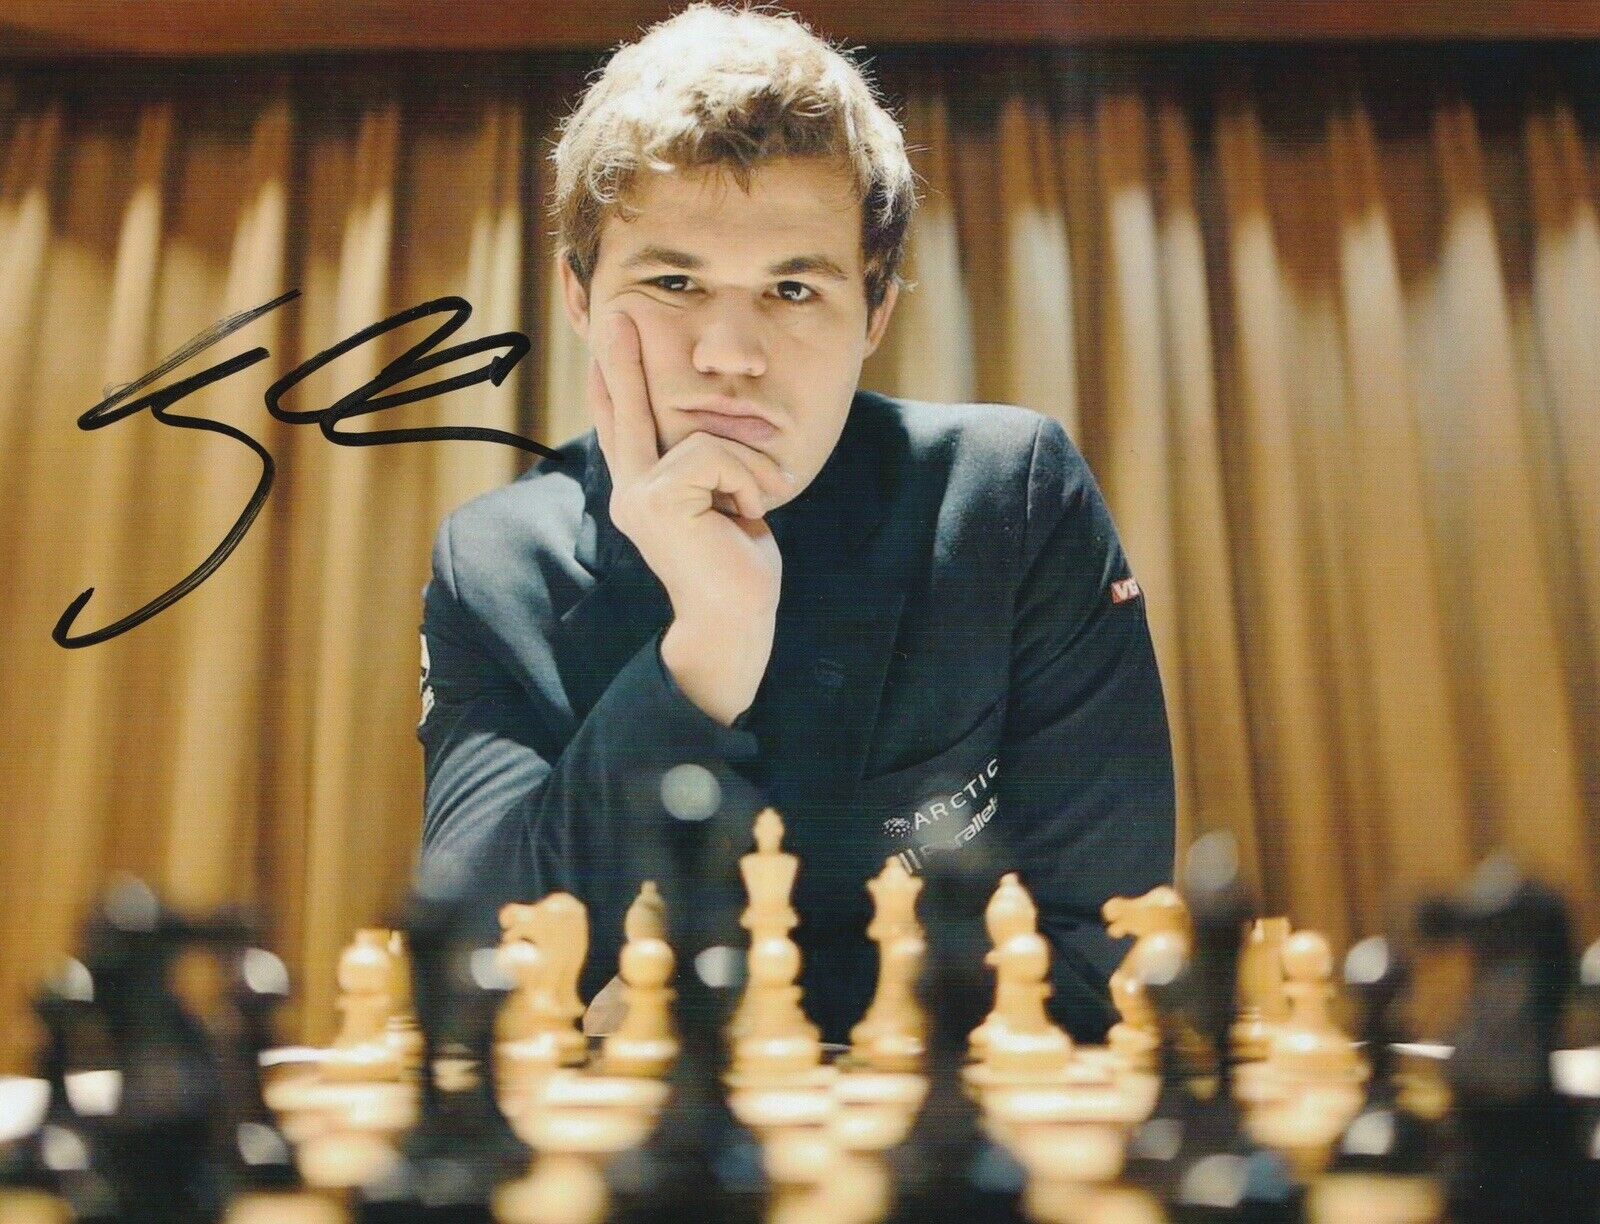 Magnus Carlsen Hand signed 8x6 Inch Photo Chess Grandmaster World Champion